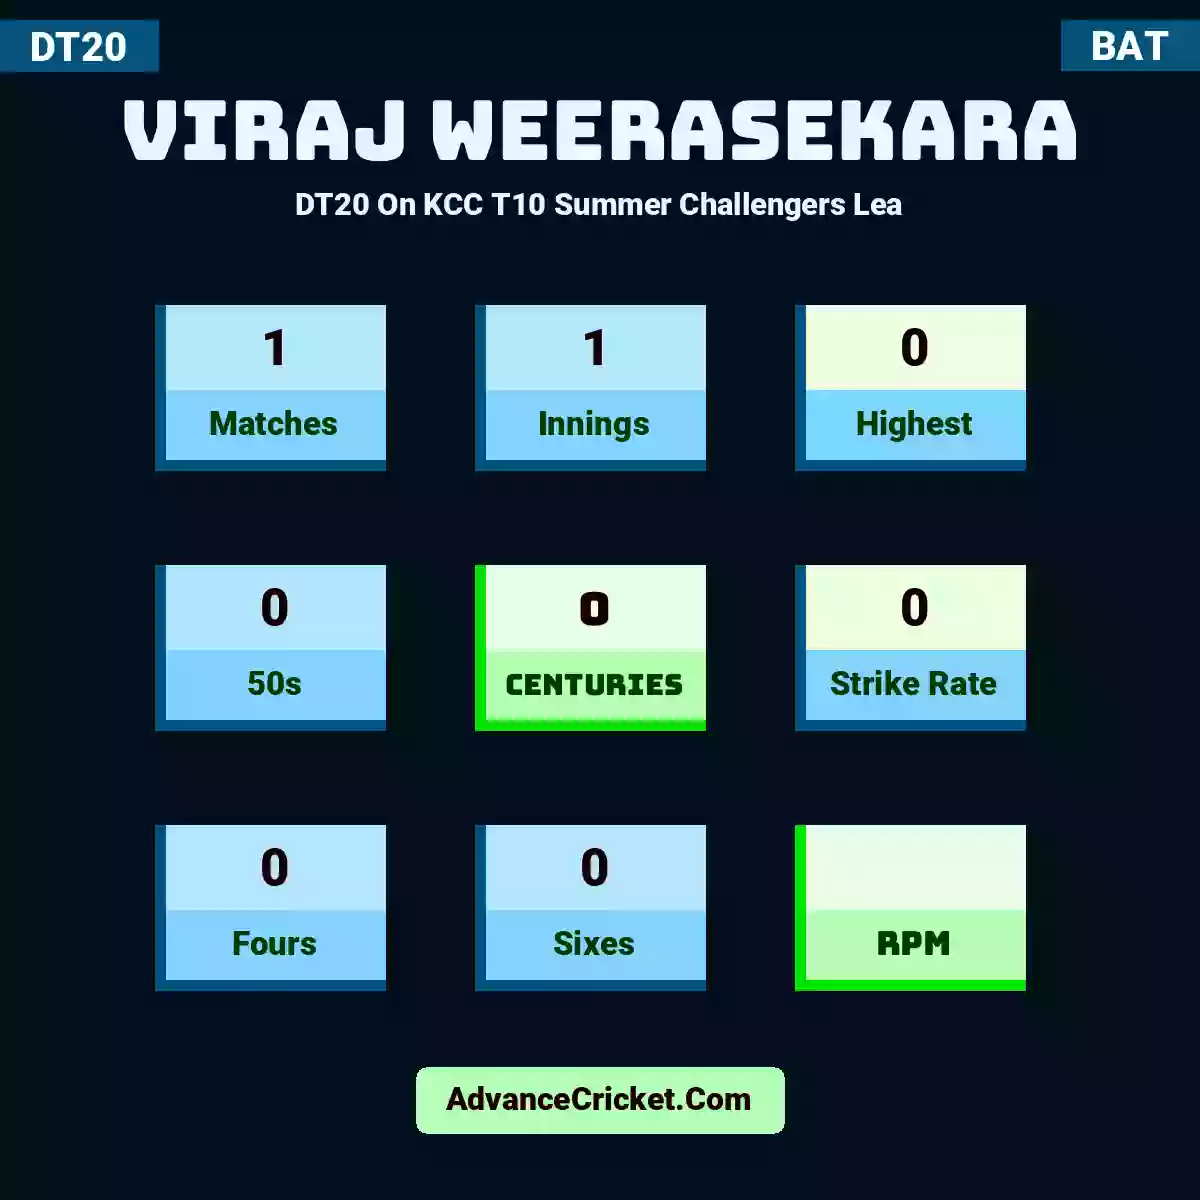 Viraj Weerasekara DT20  On KCC T10 Summer Challengers Lea, Viraj Weerasekara played 1 matches, scored 0 runs as highest, 0 half-centuries, and 0 centuries, with a strike rate of 0. V.Weerasekara hit 0 fours and 0 sixes.